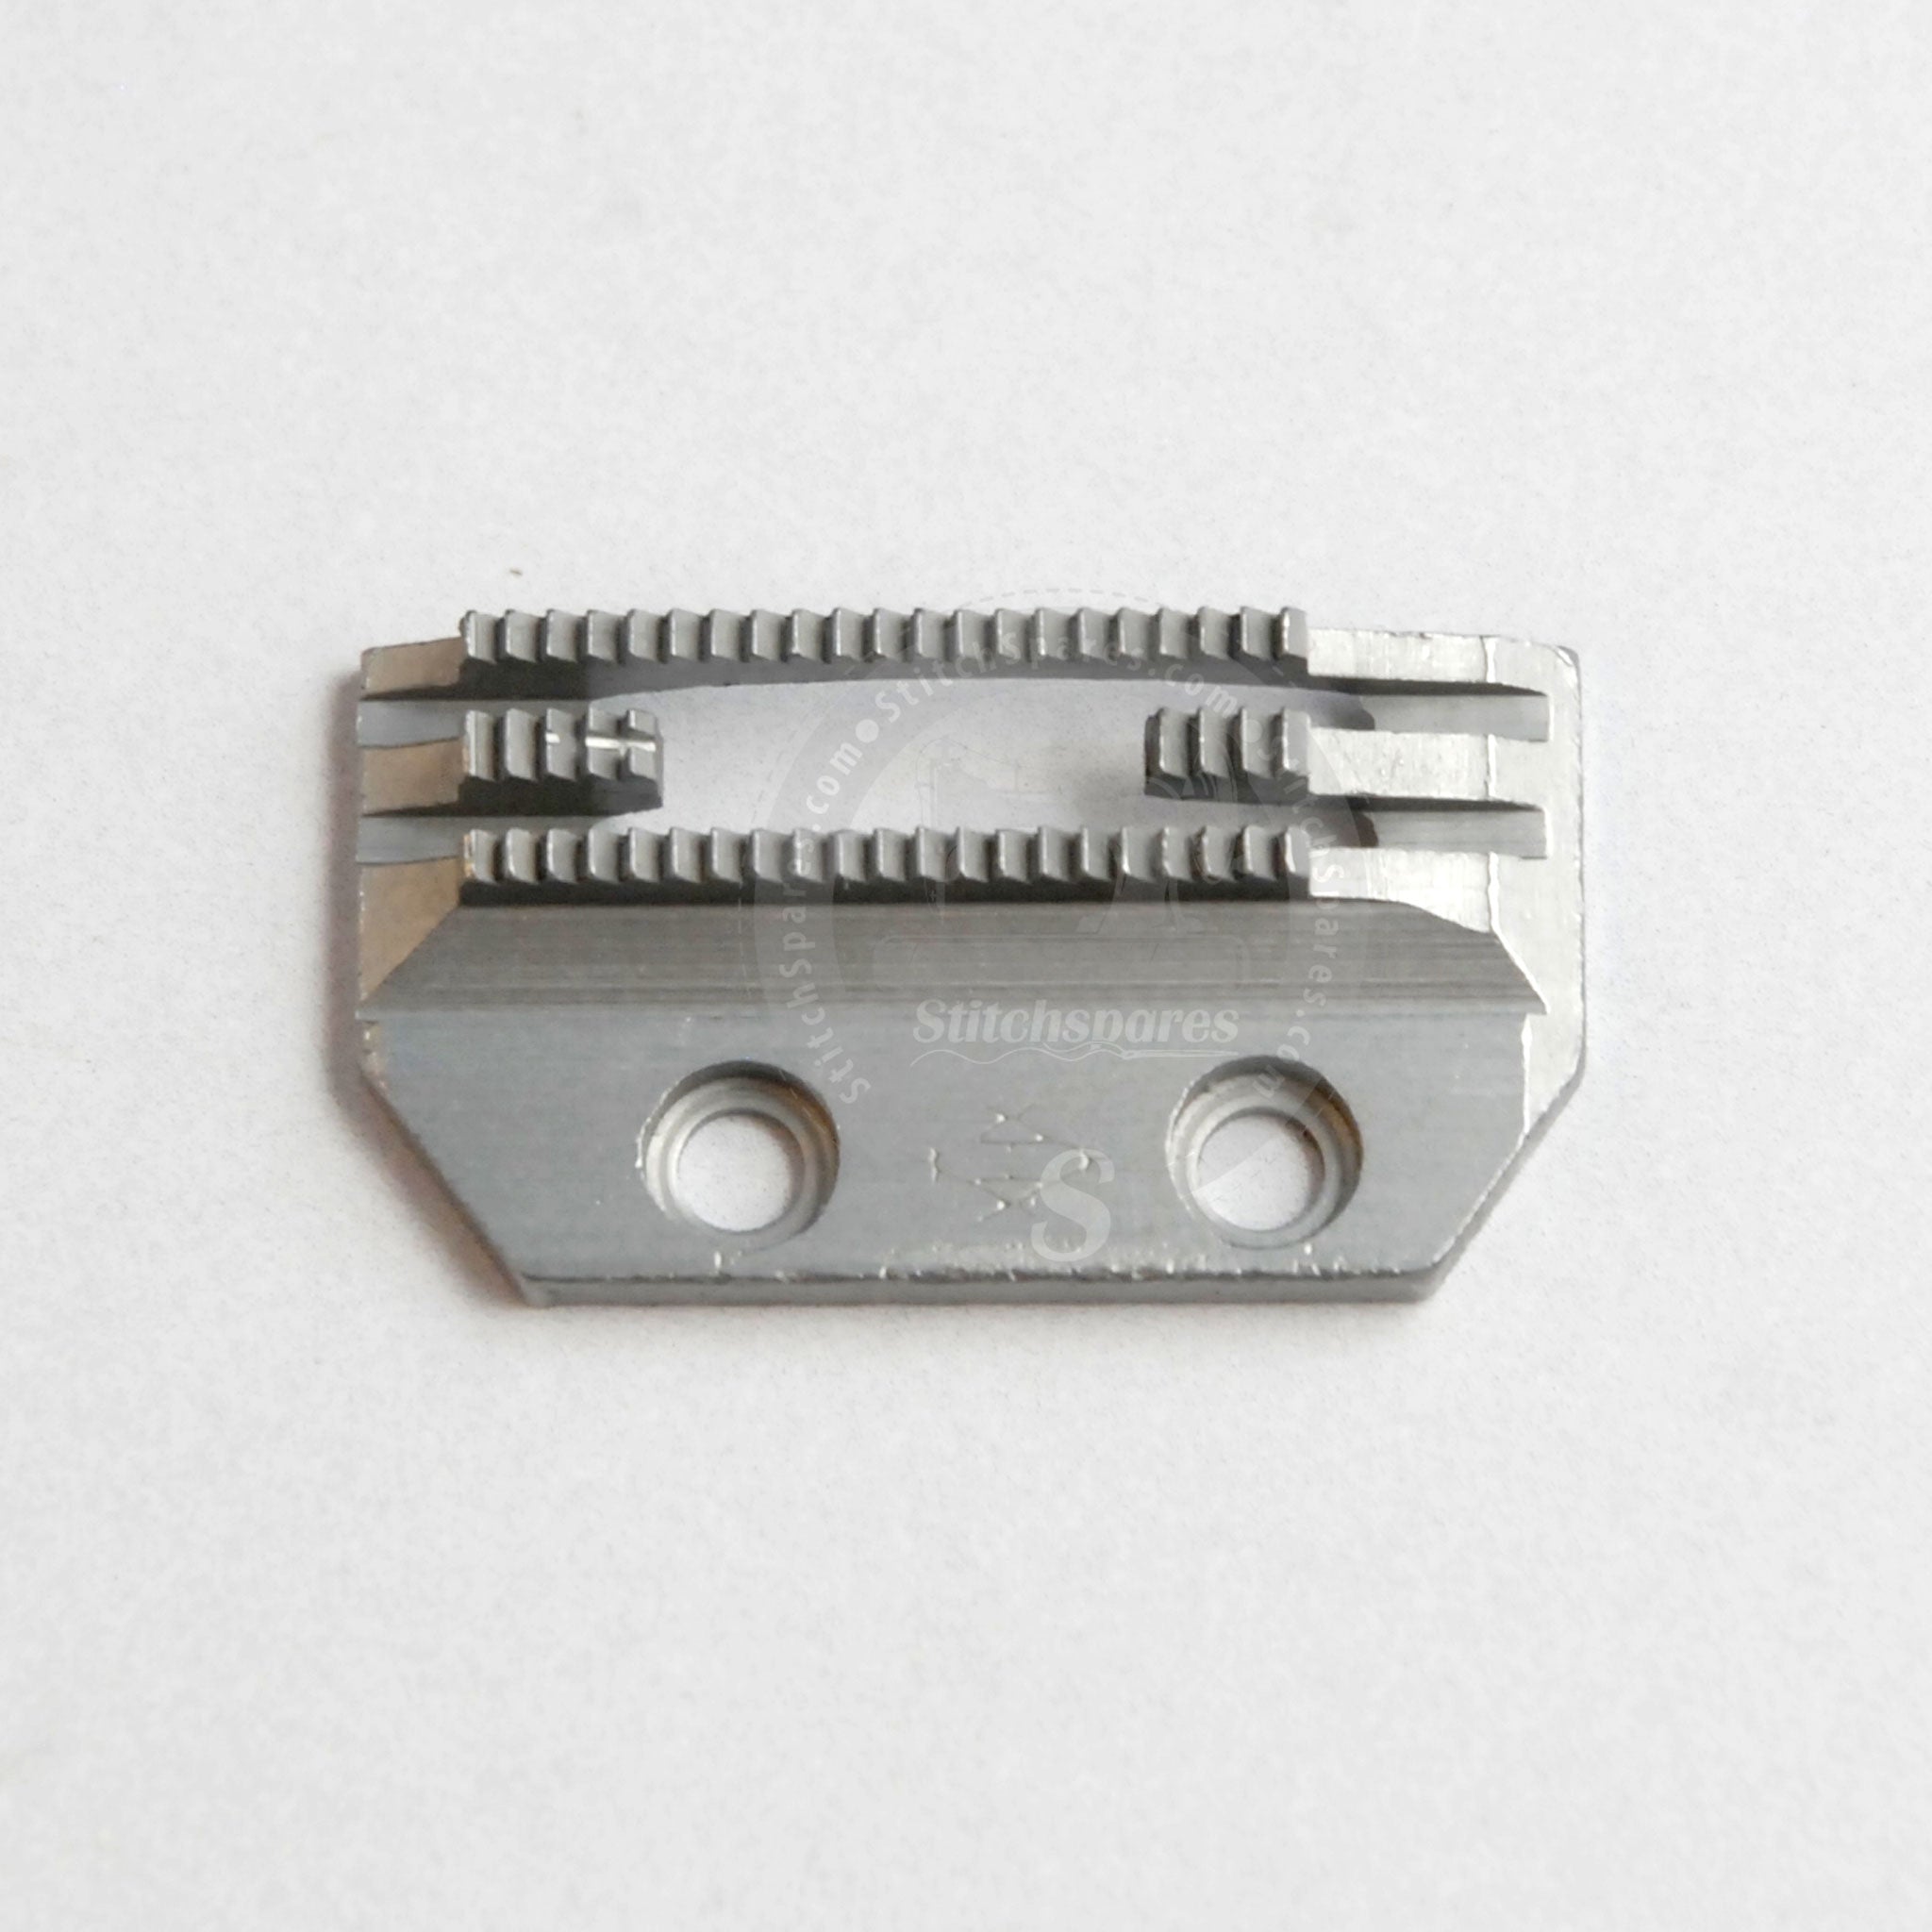 149057 Feed Dog E Type (Negro) Juki Single Needle Lock-Stitch Machine